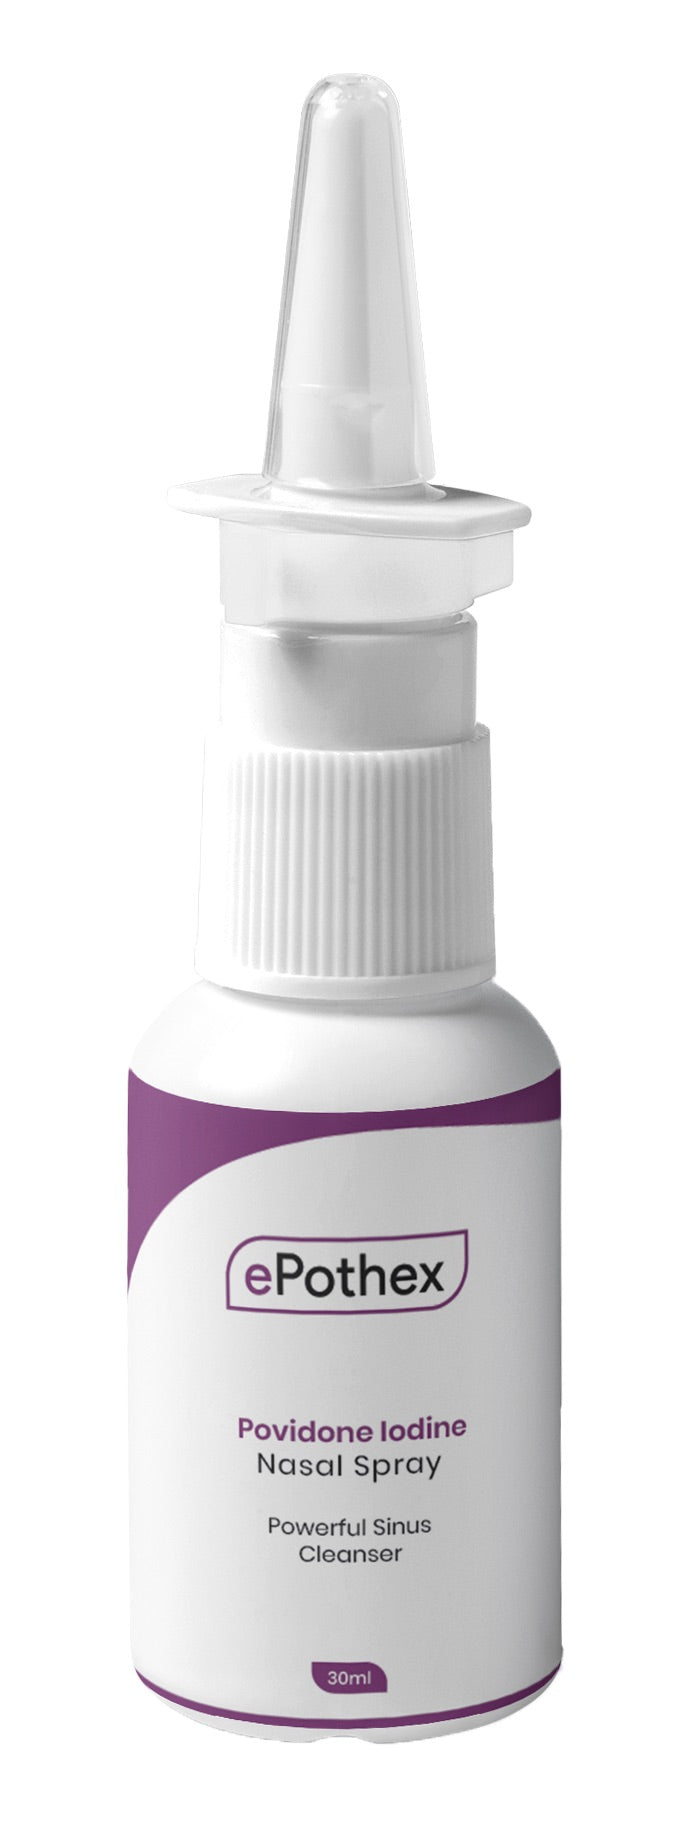 Povidone Iodine Nasal Spray - 30ml - ePothex - ePothex